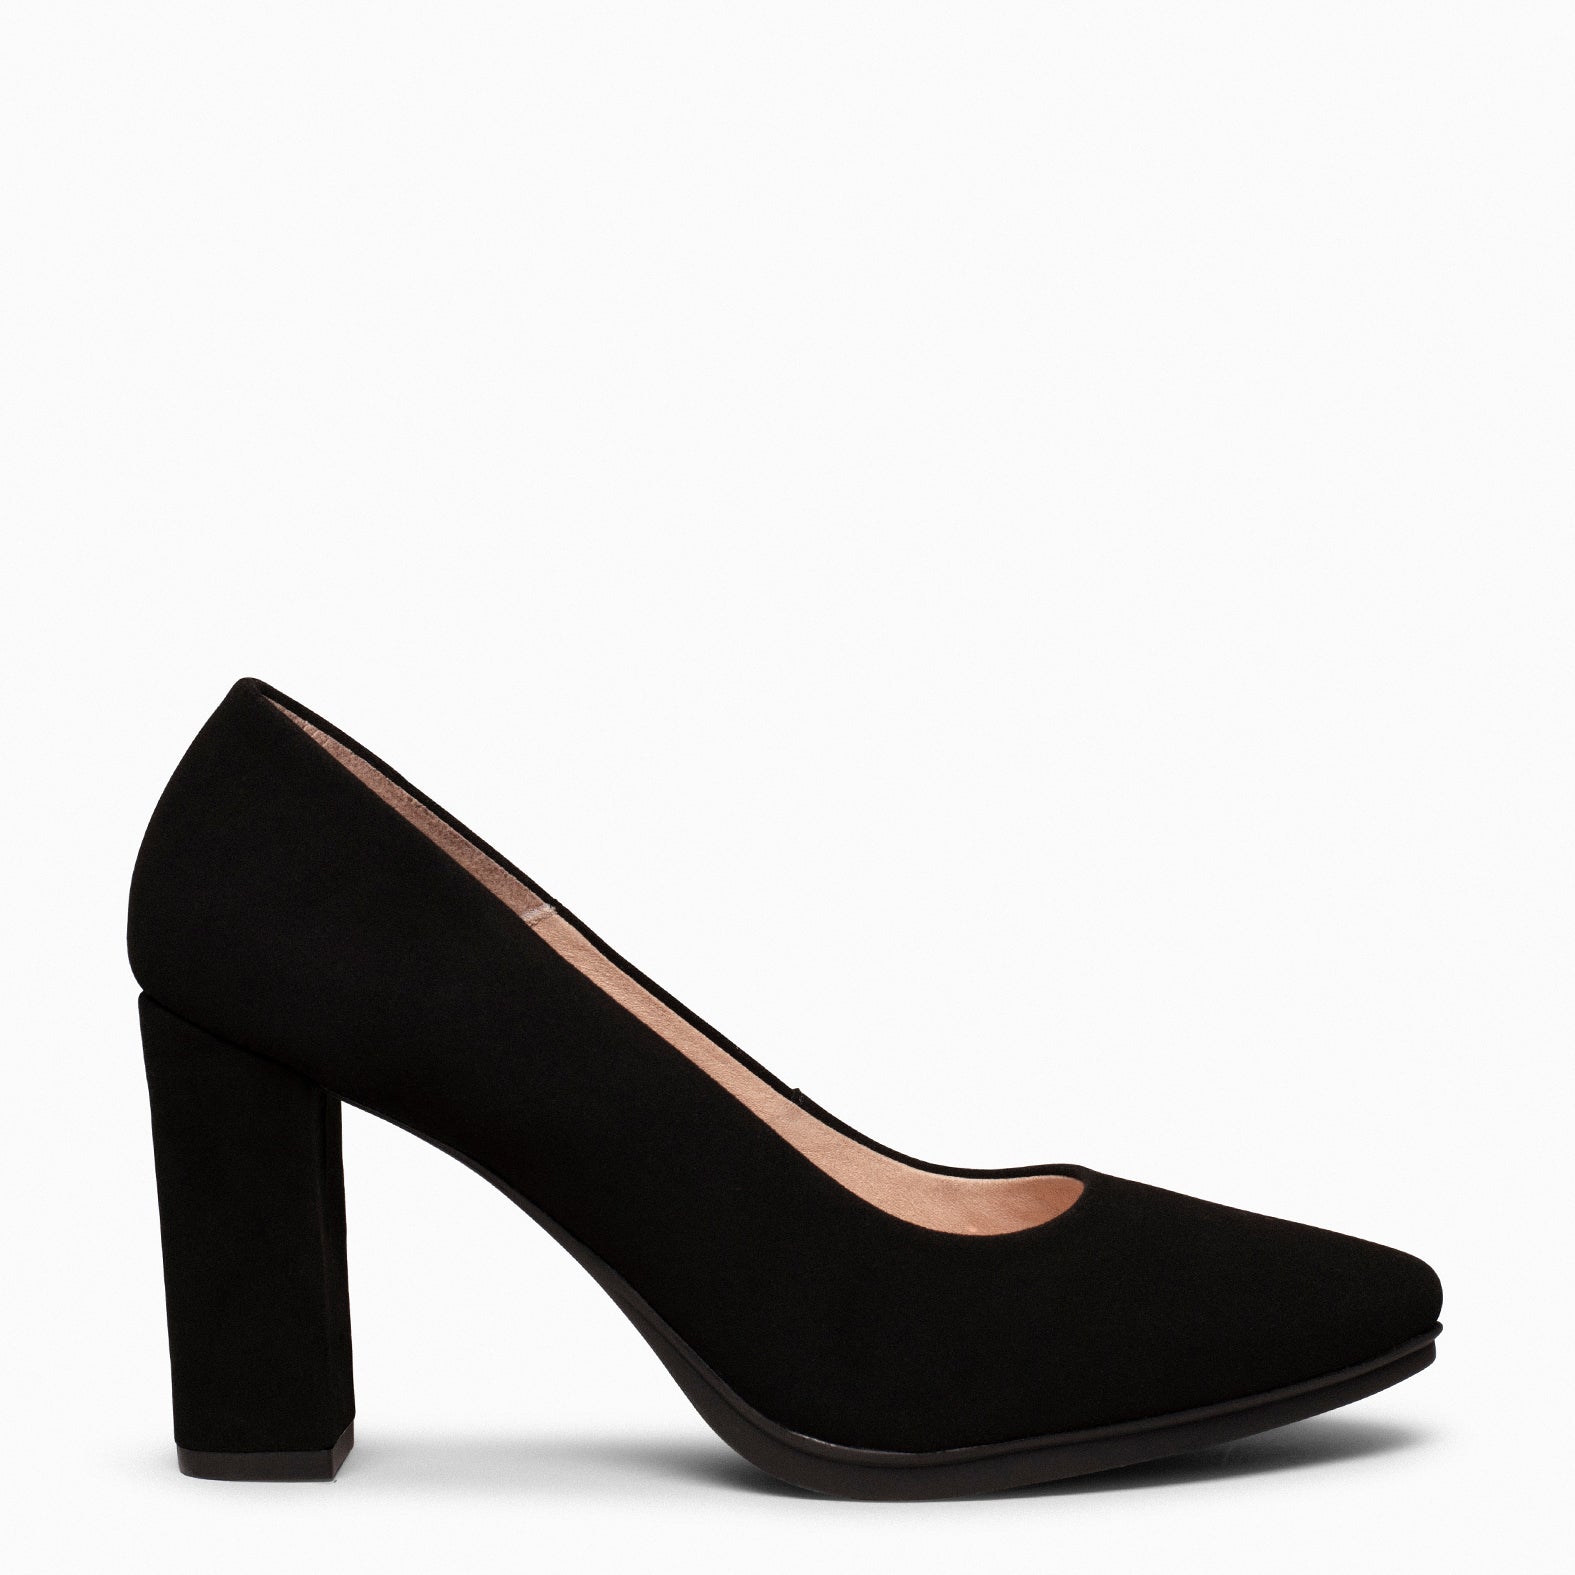 URBAN – BLACK Suede high-heeled shoes 